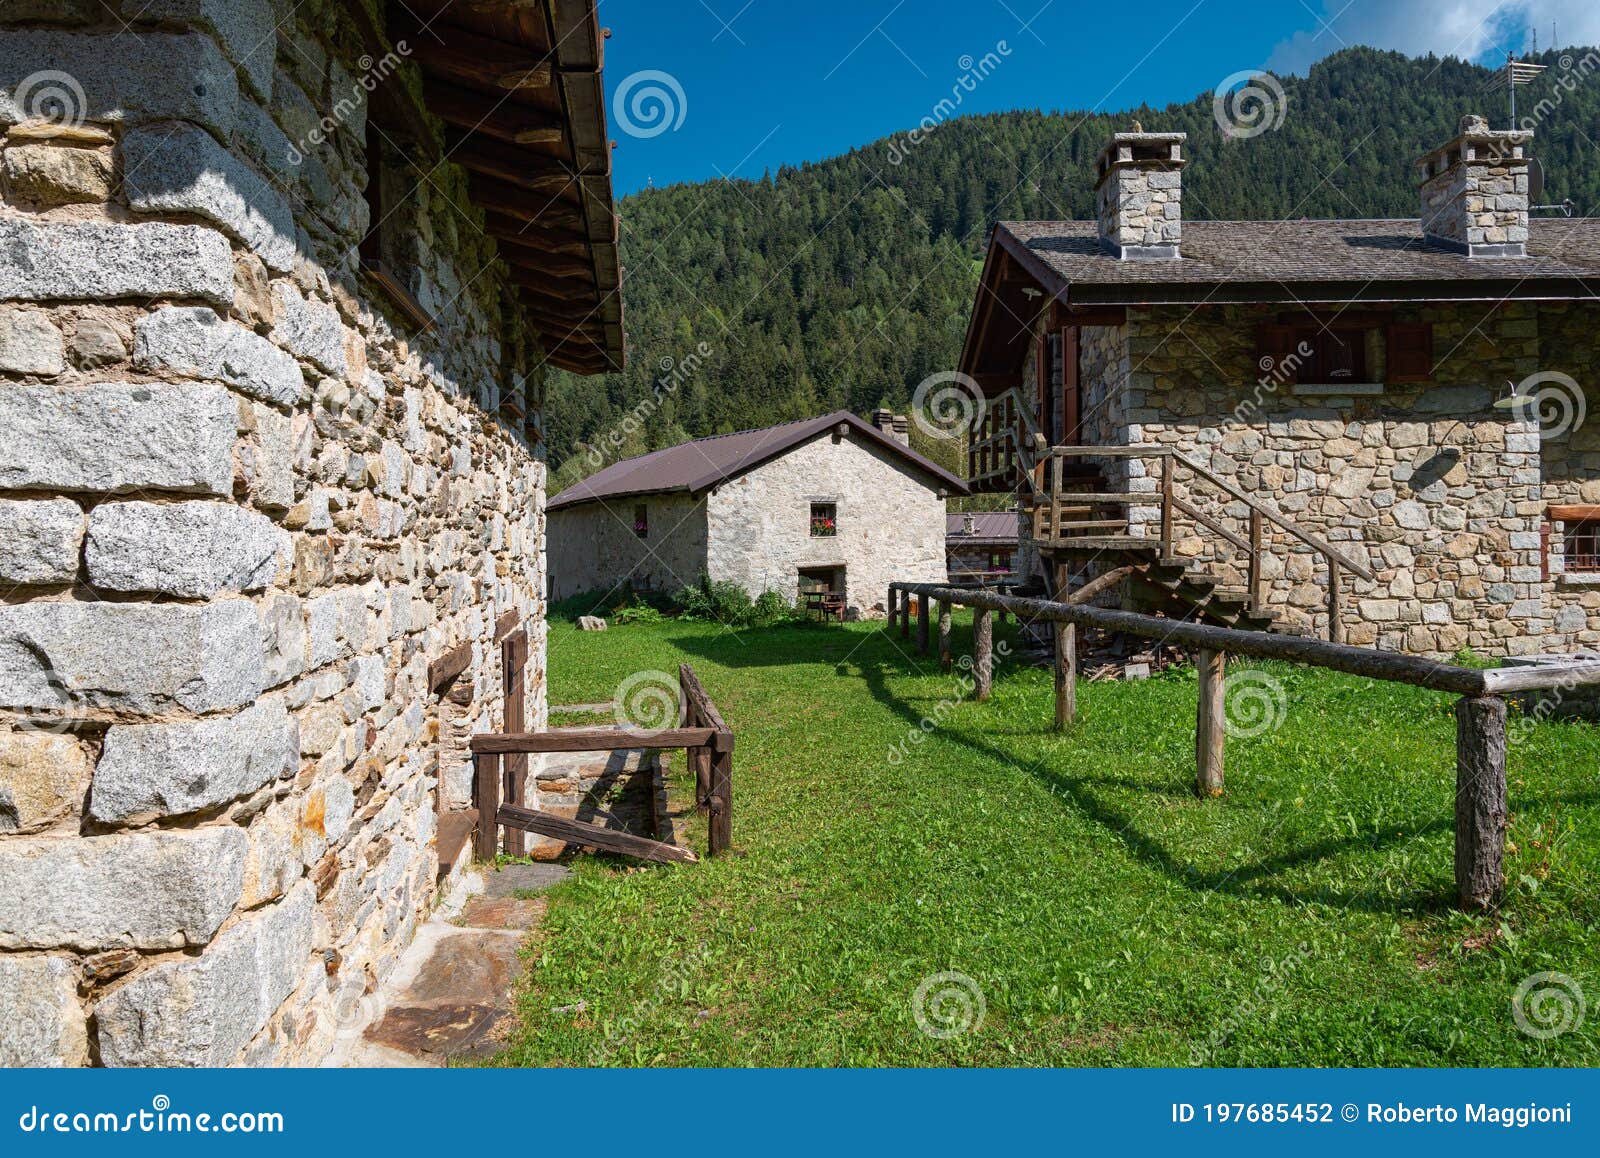 camonica valley, valbione, ponte di legno, italy traditional alpine houses